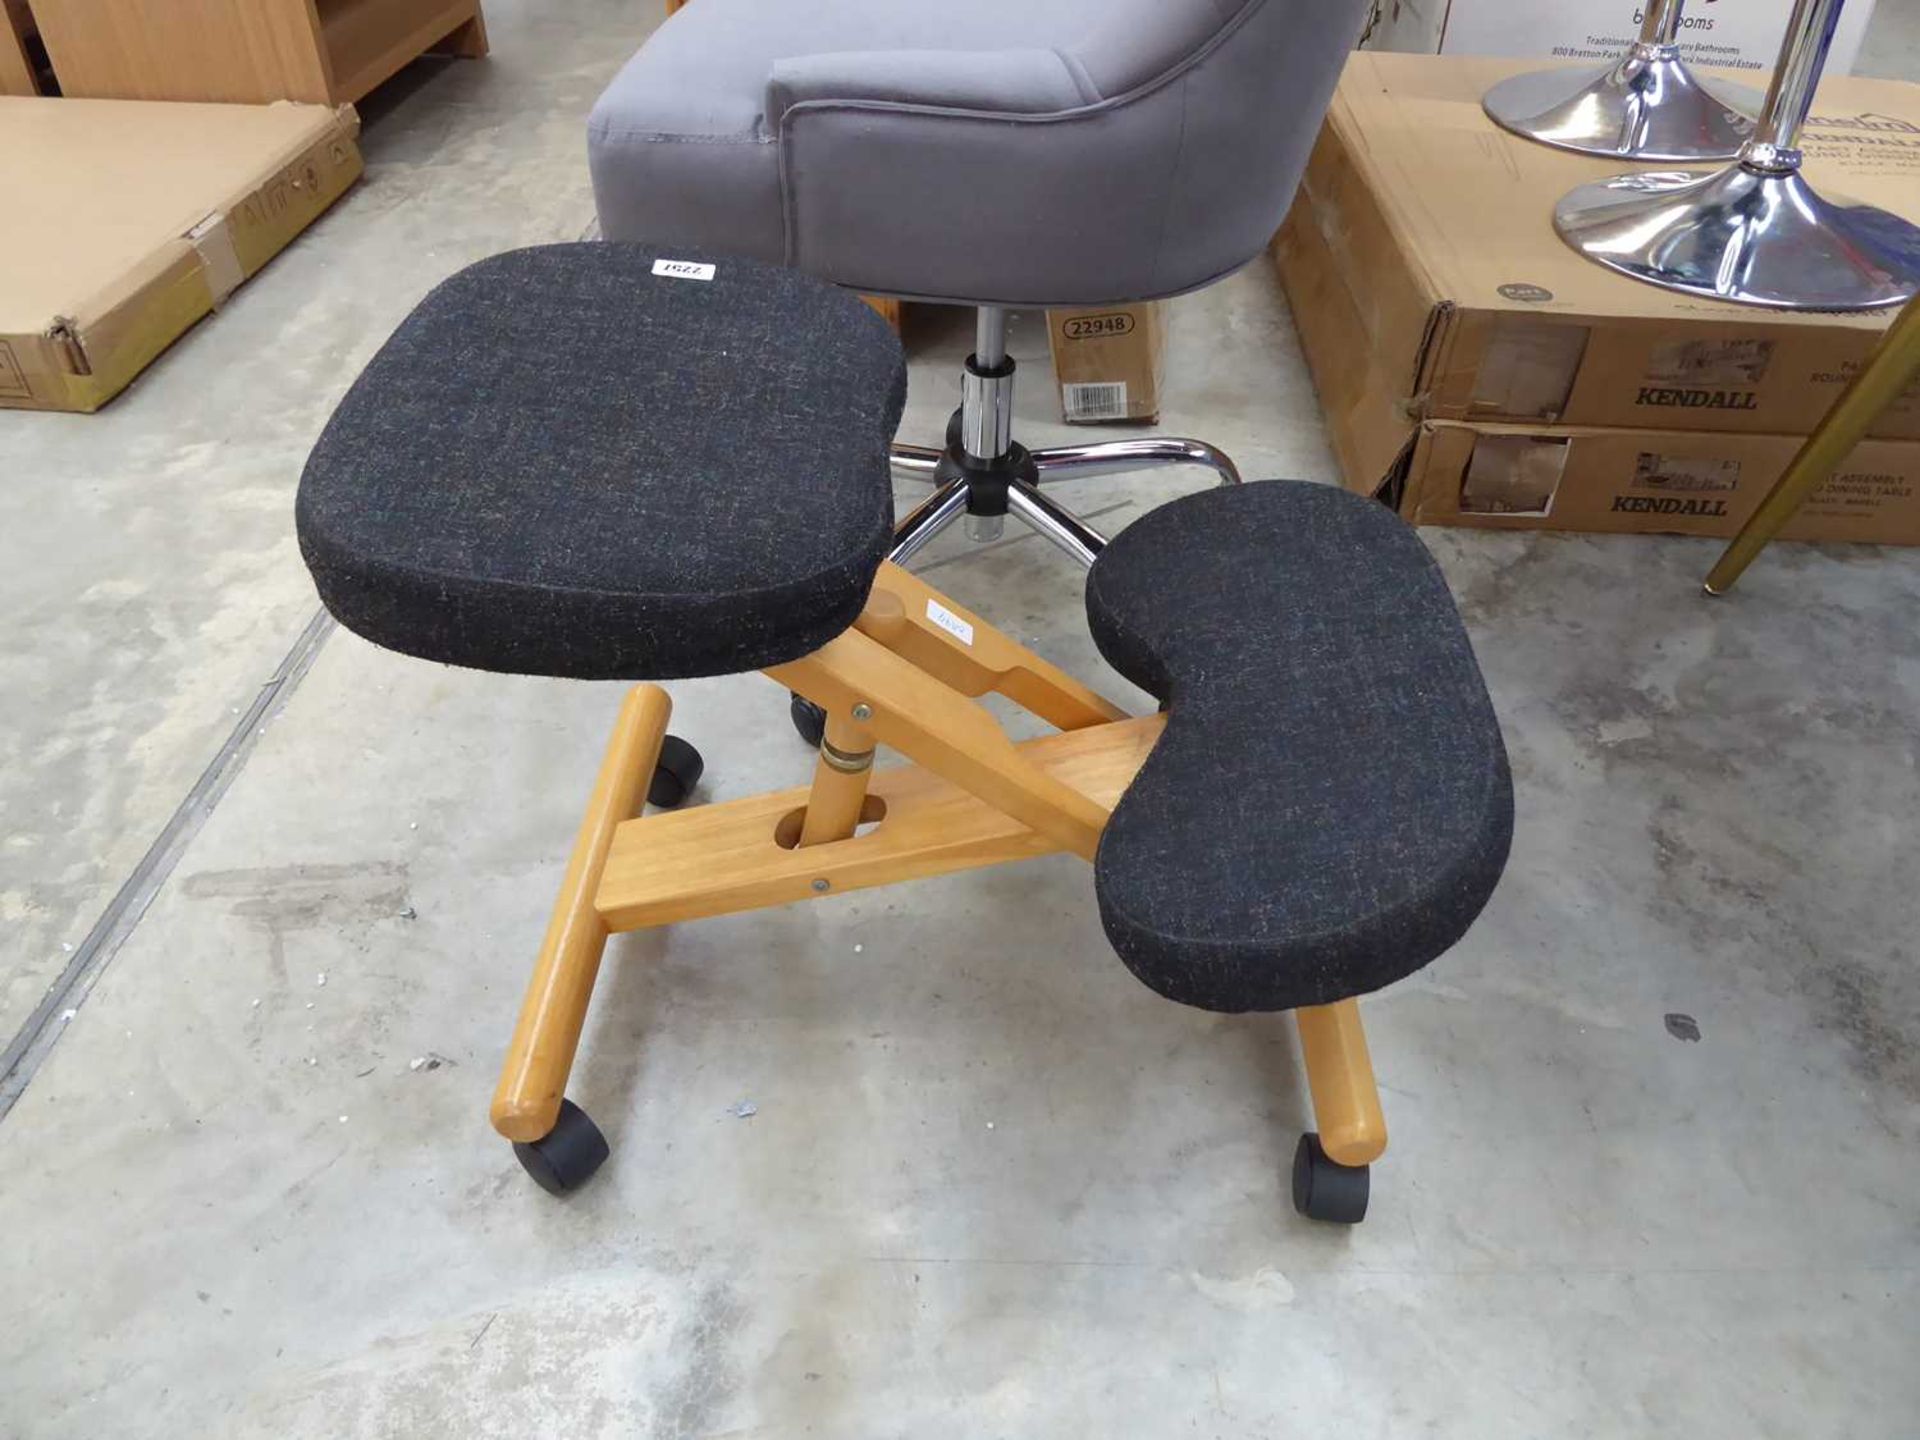 4 wheel soft cushion stool